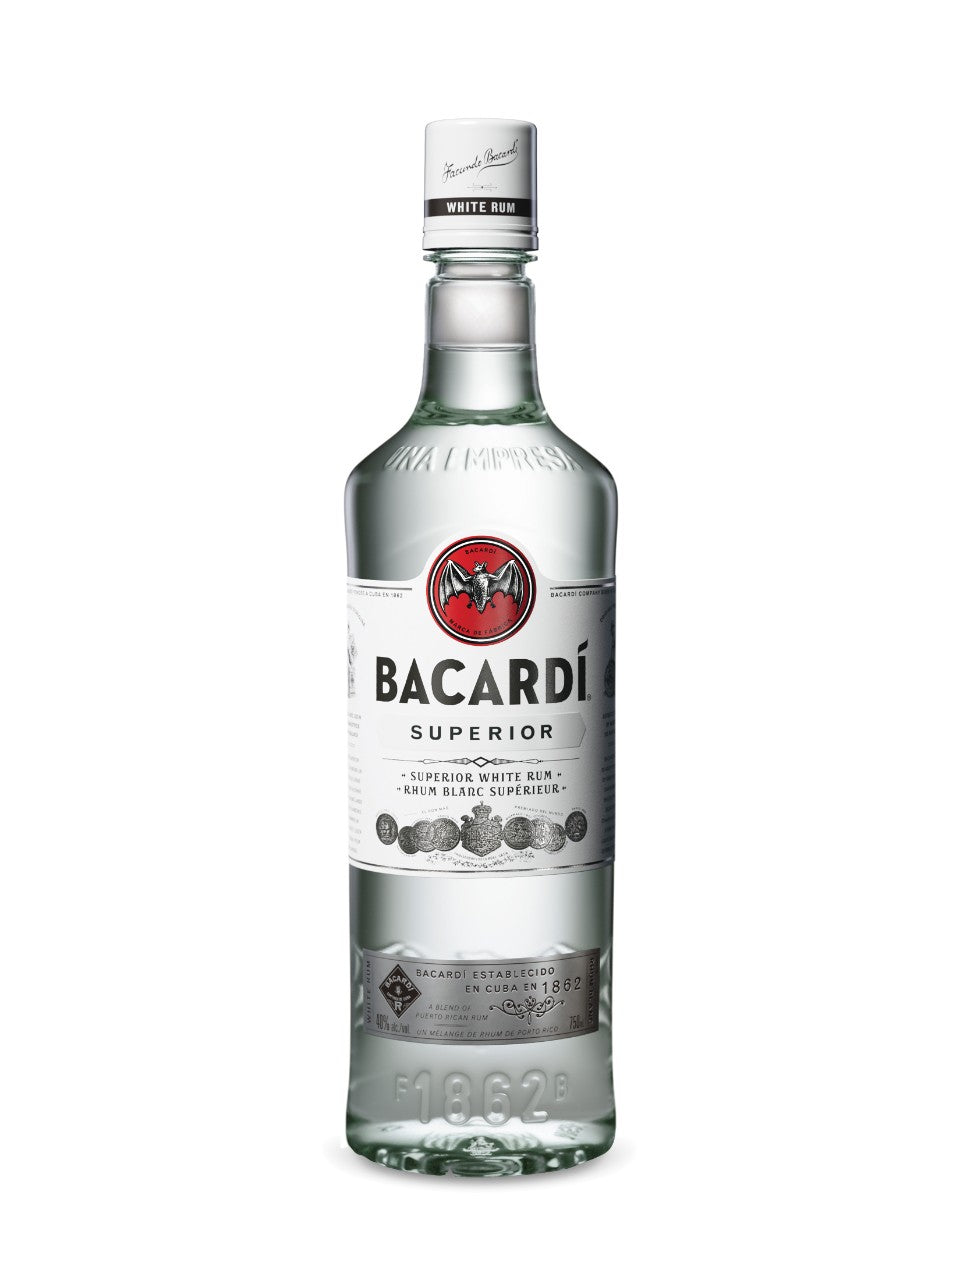 Bacardi Superior White Rum (PET) 750 mL bottle